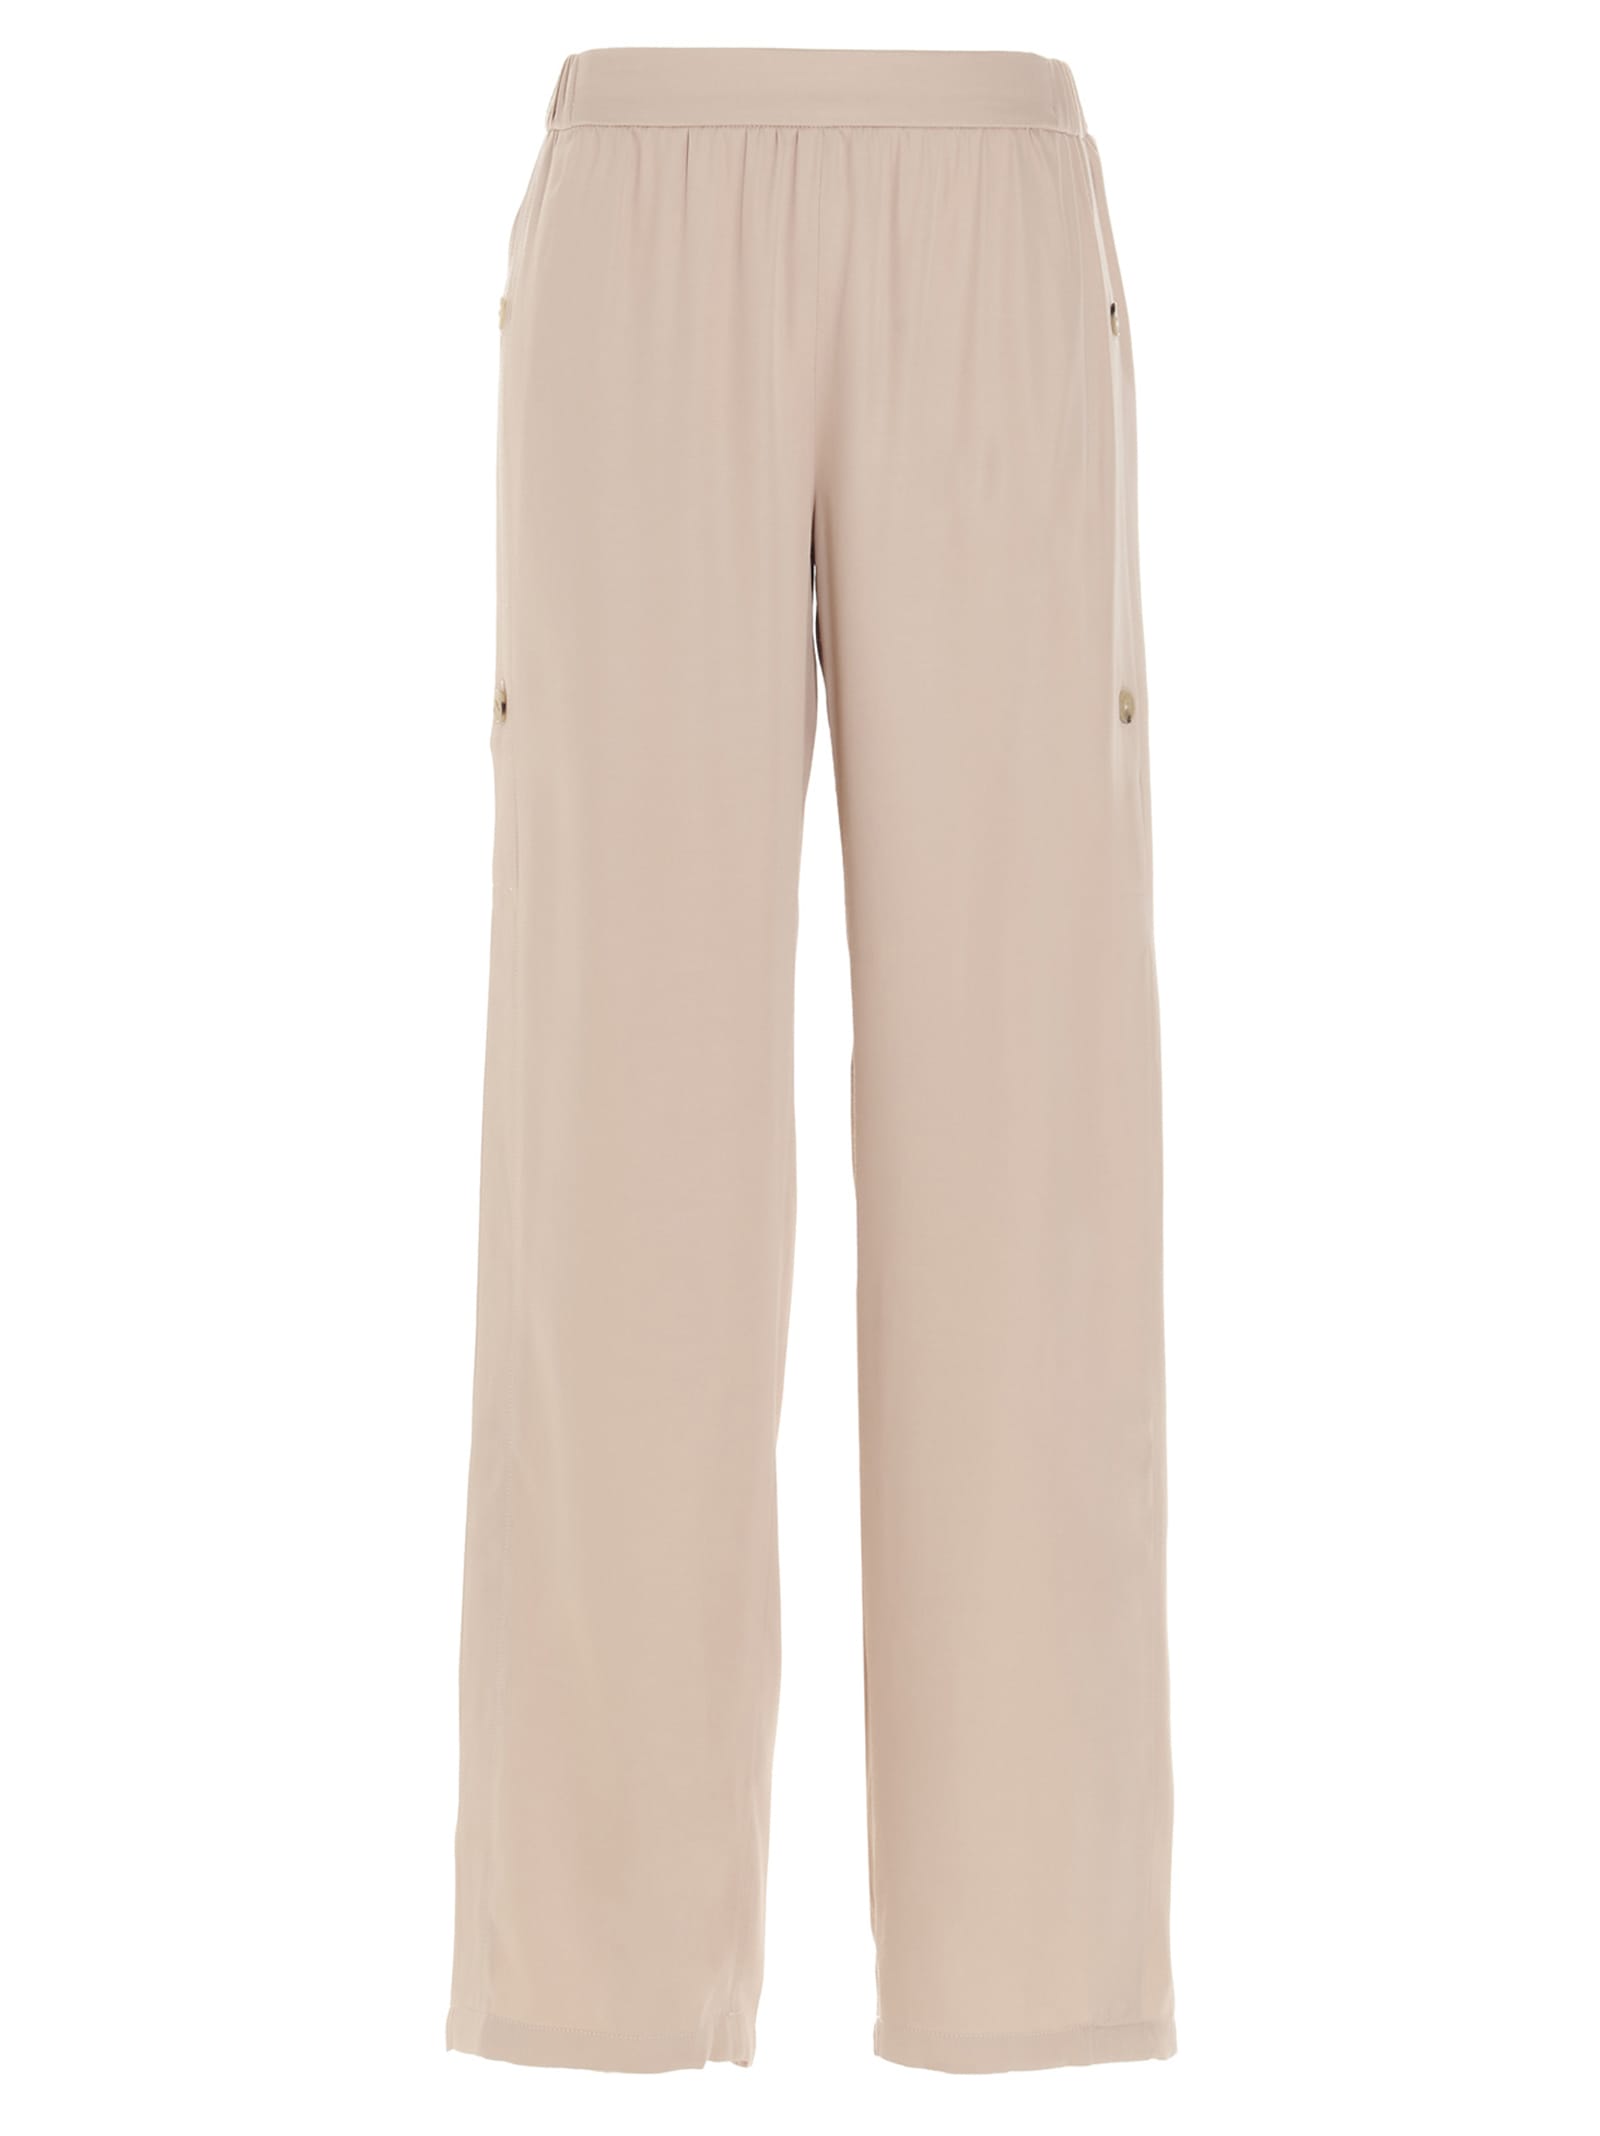 AERON FLORES trousers,P138 250